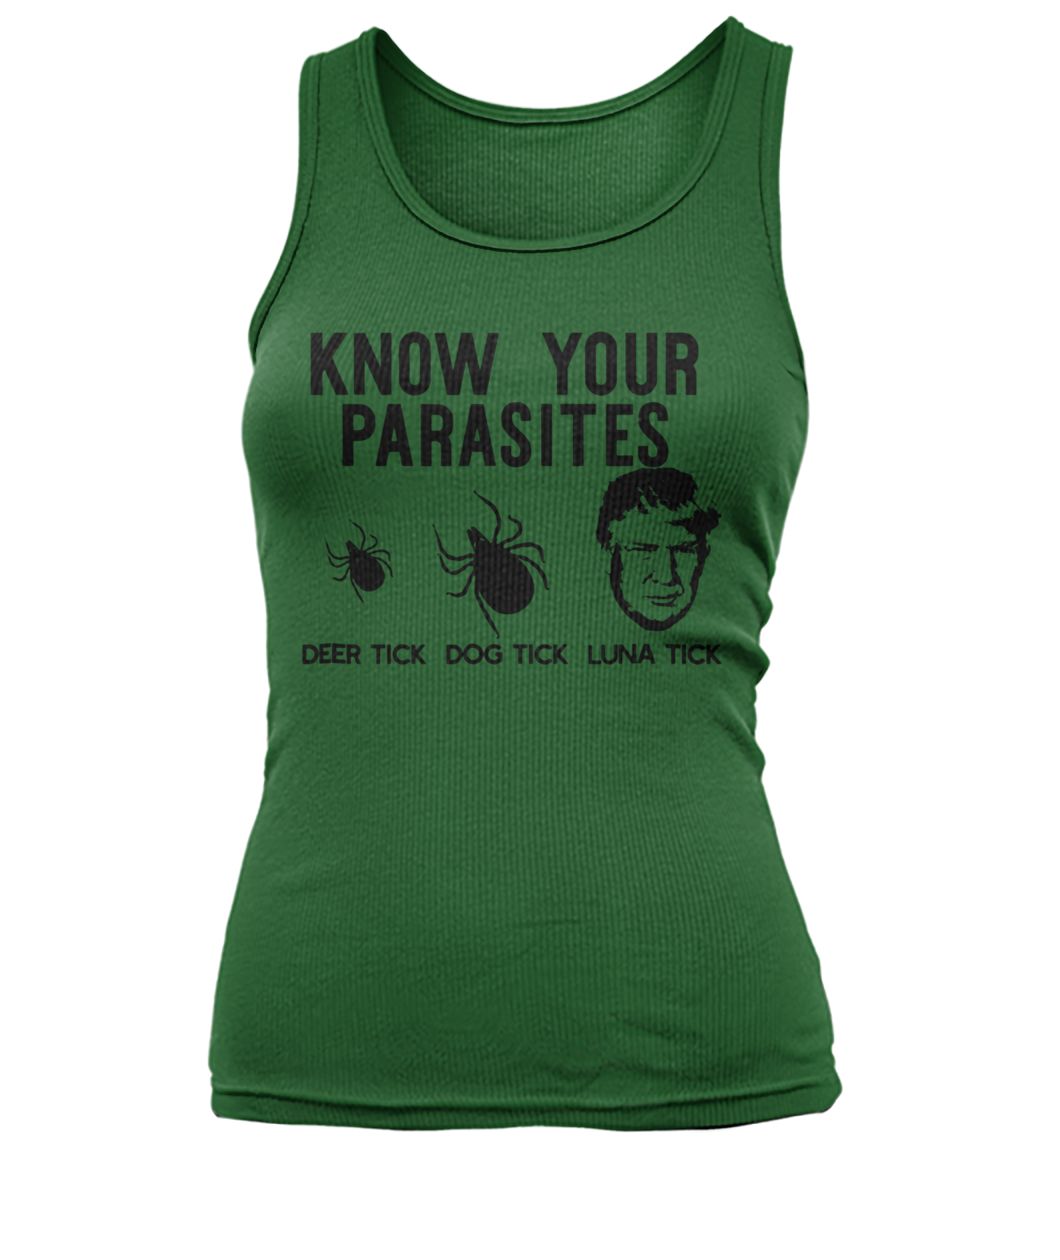 Know your parasites anti-trump af resist women's tank top